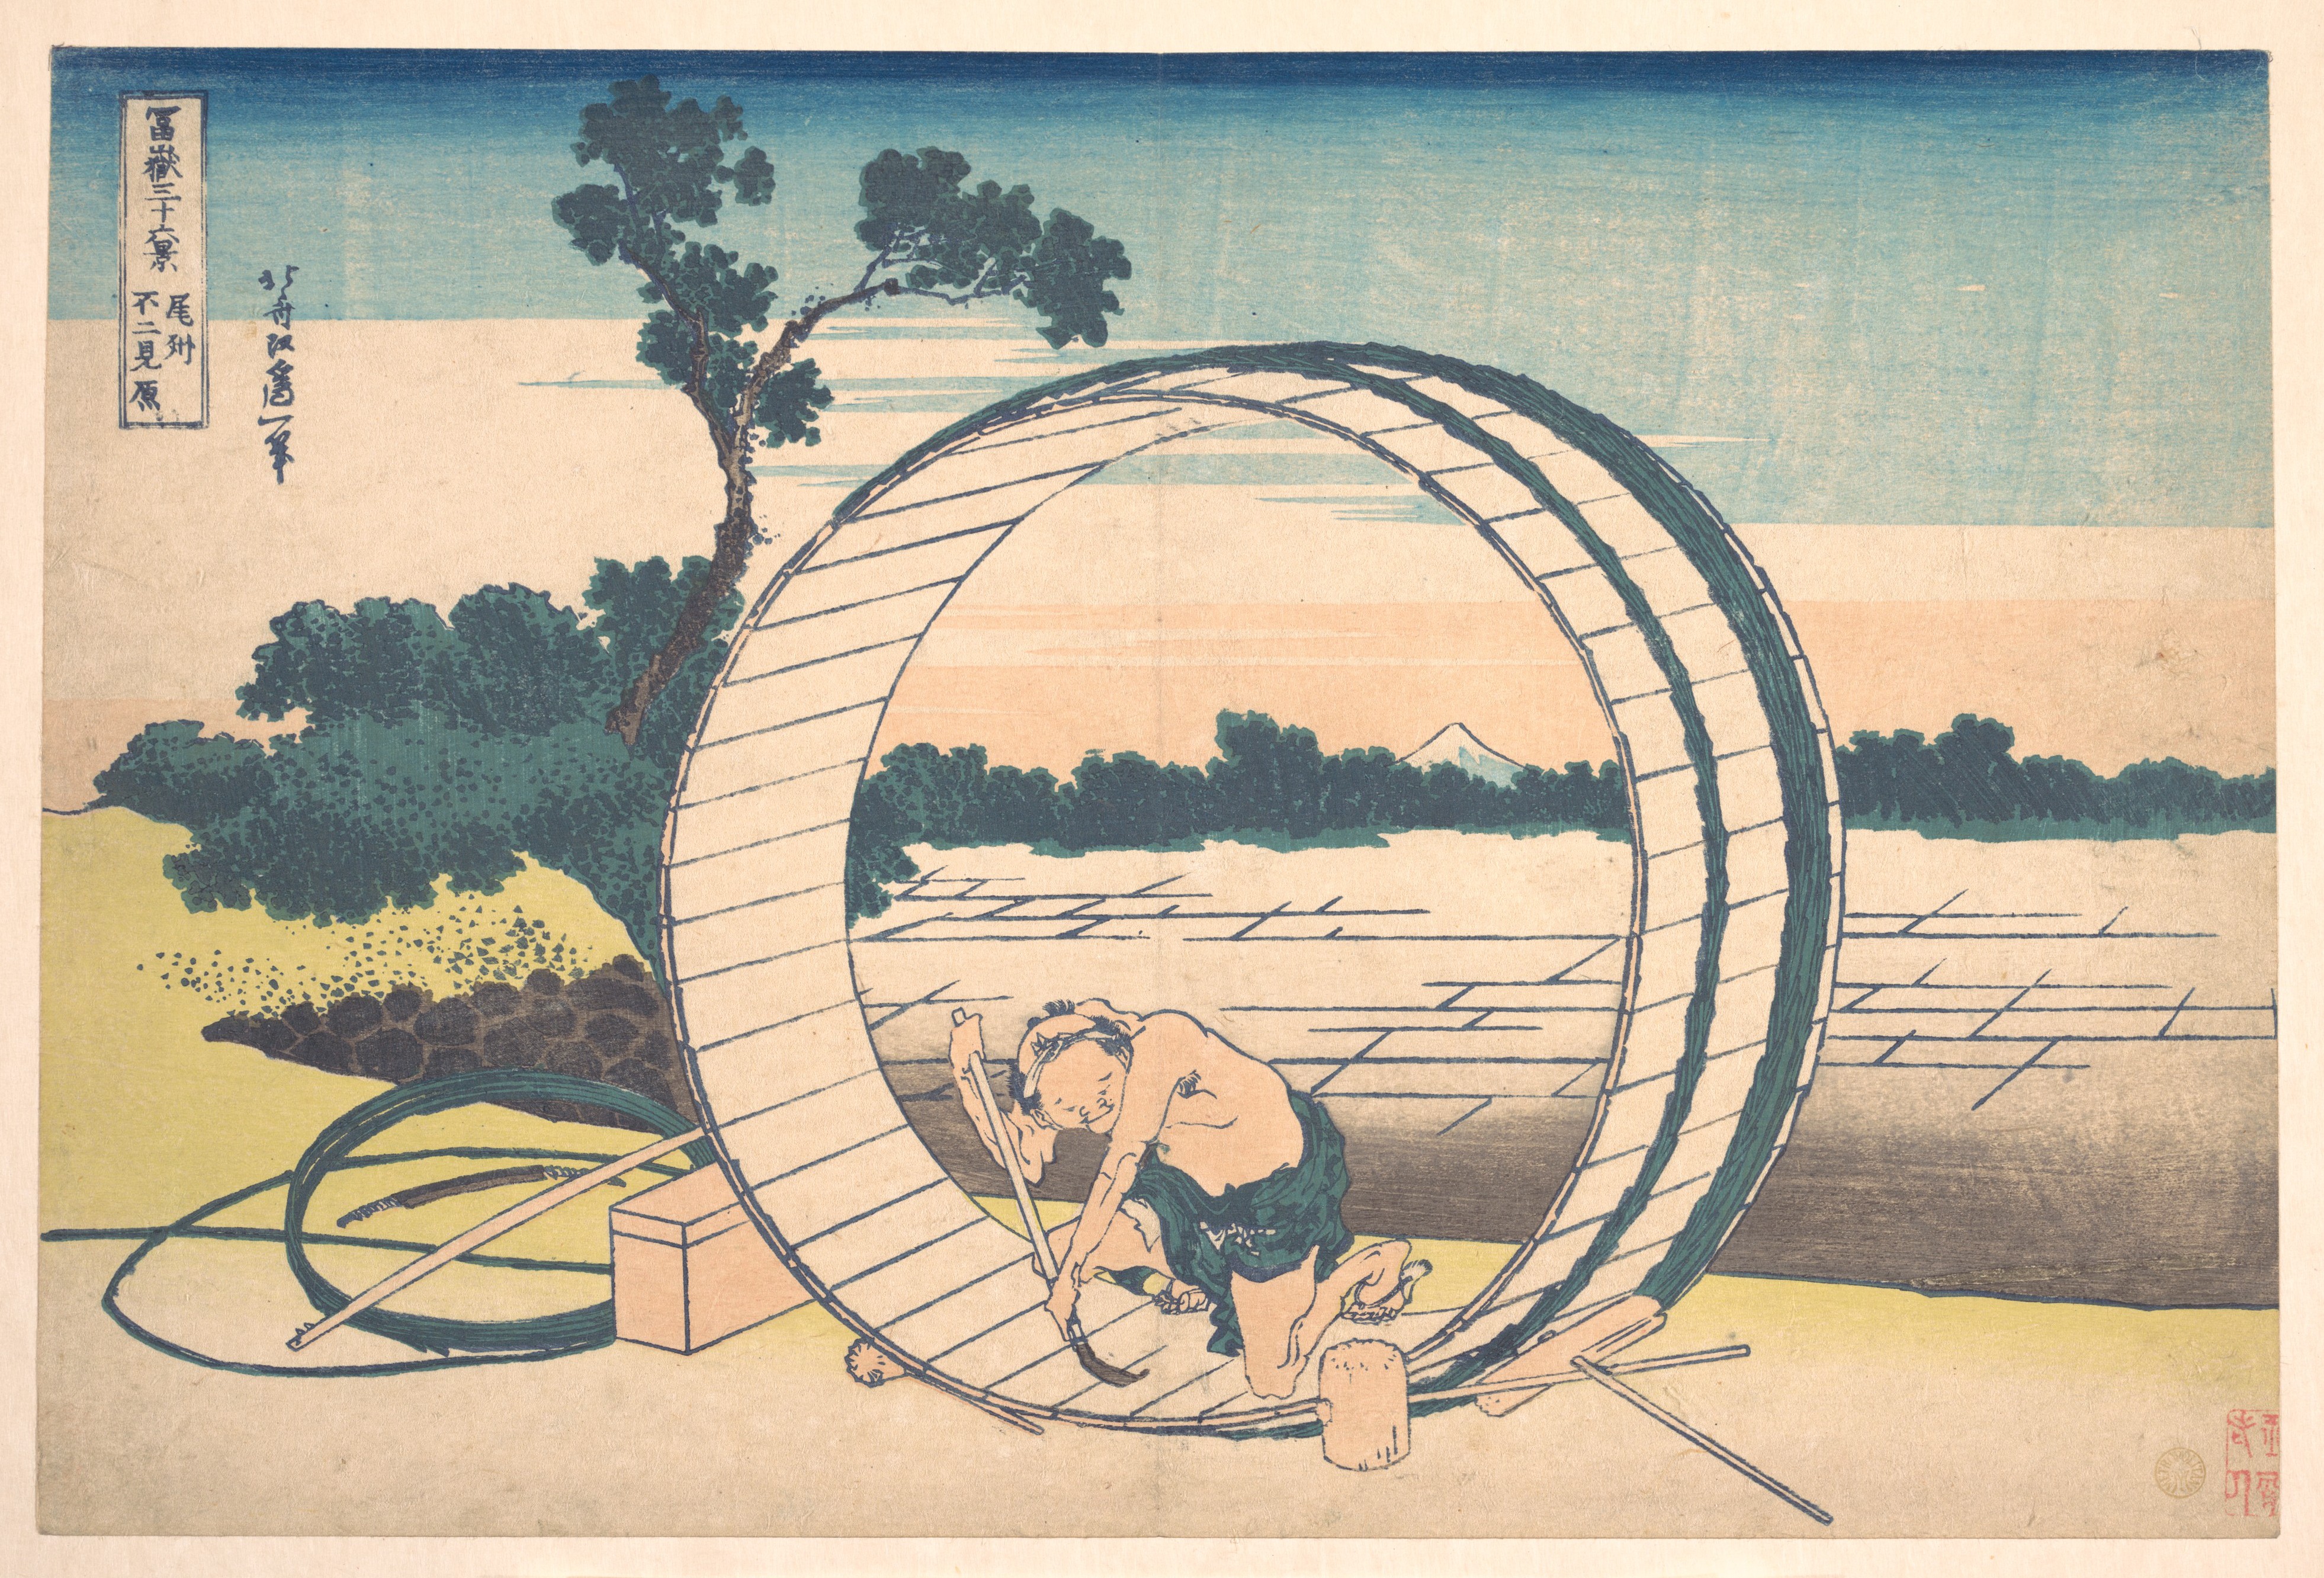 Katsushika Hokusai. Fujimigahara in Owari Province, from the series Thirty-six Views of Mount Fuji